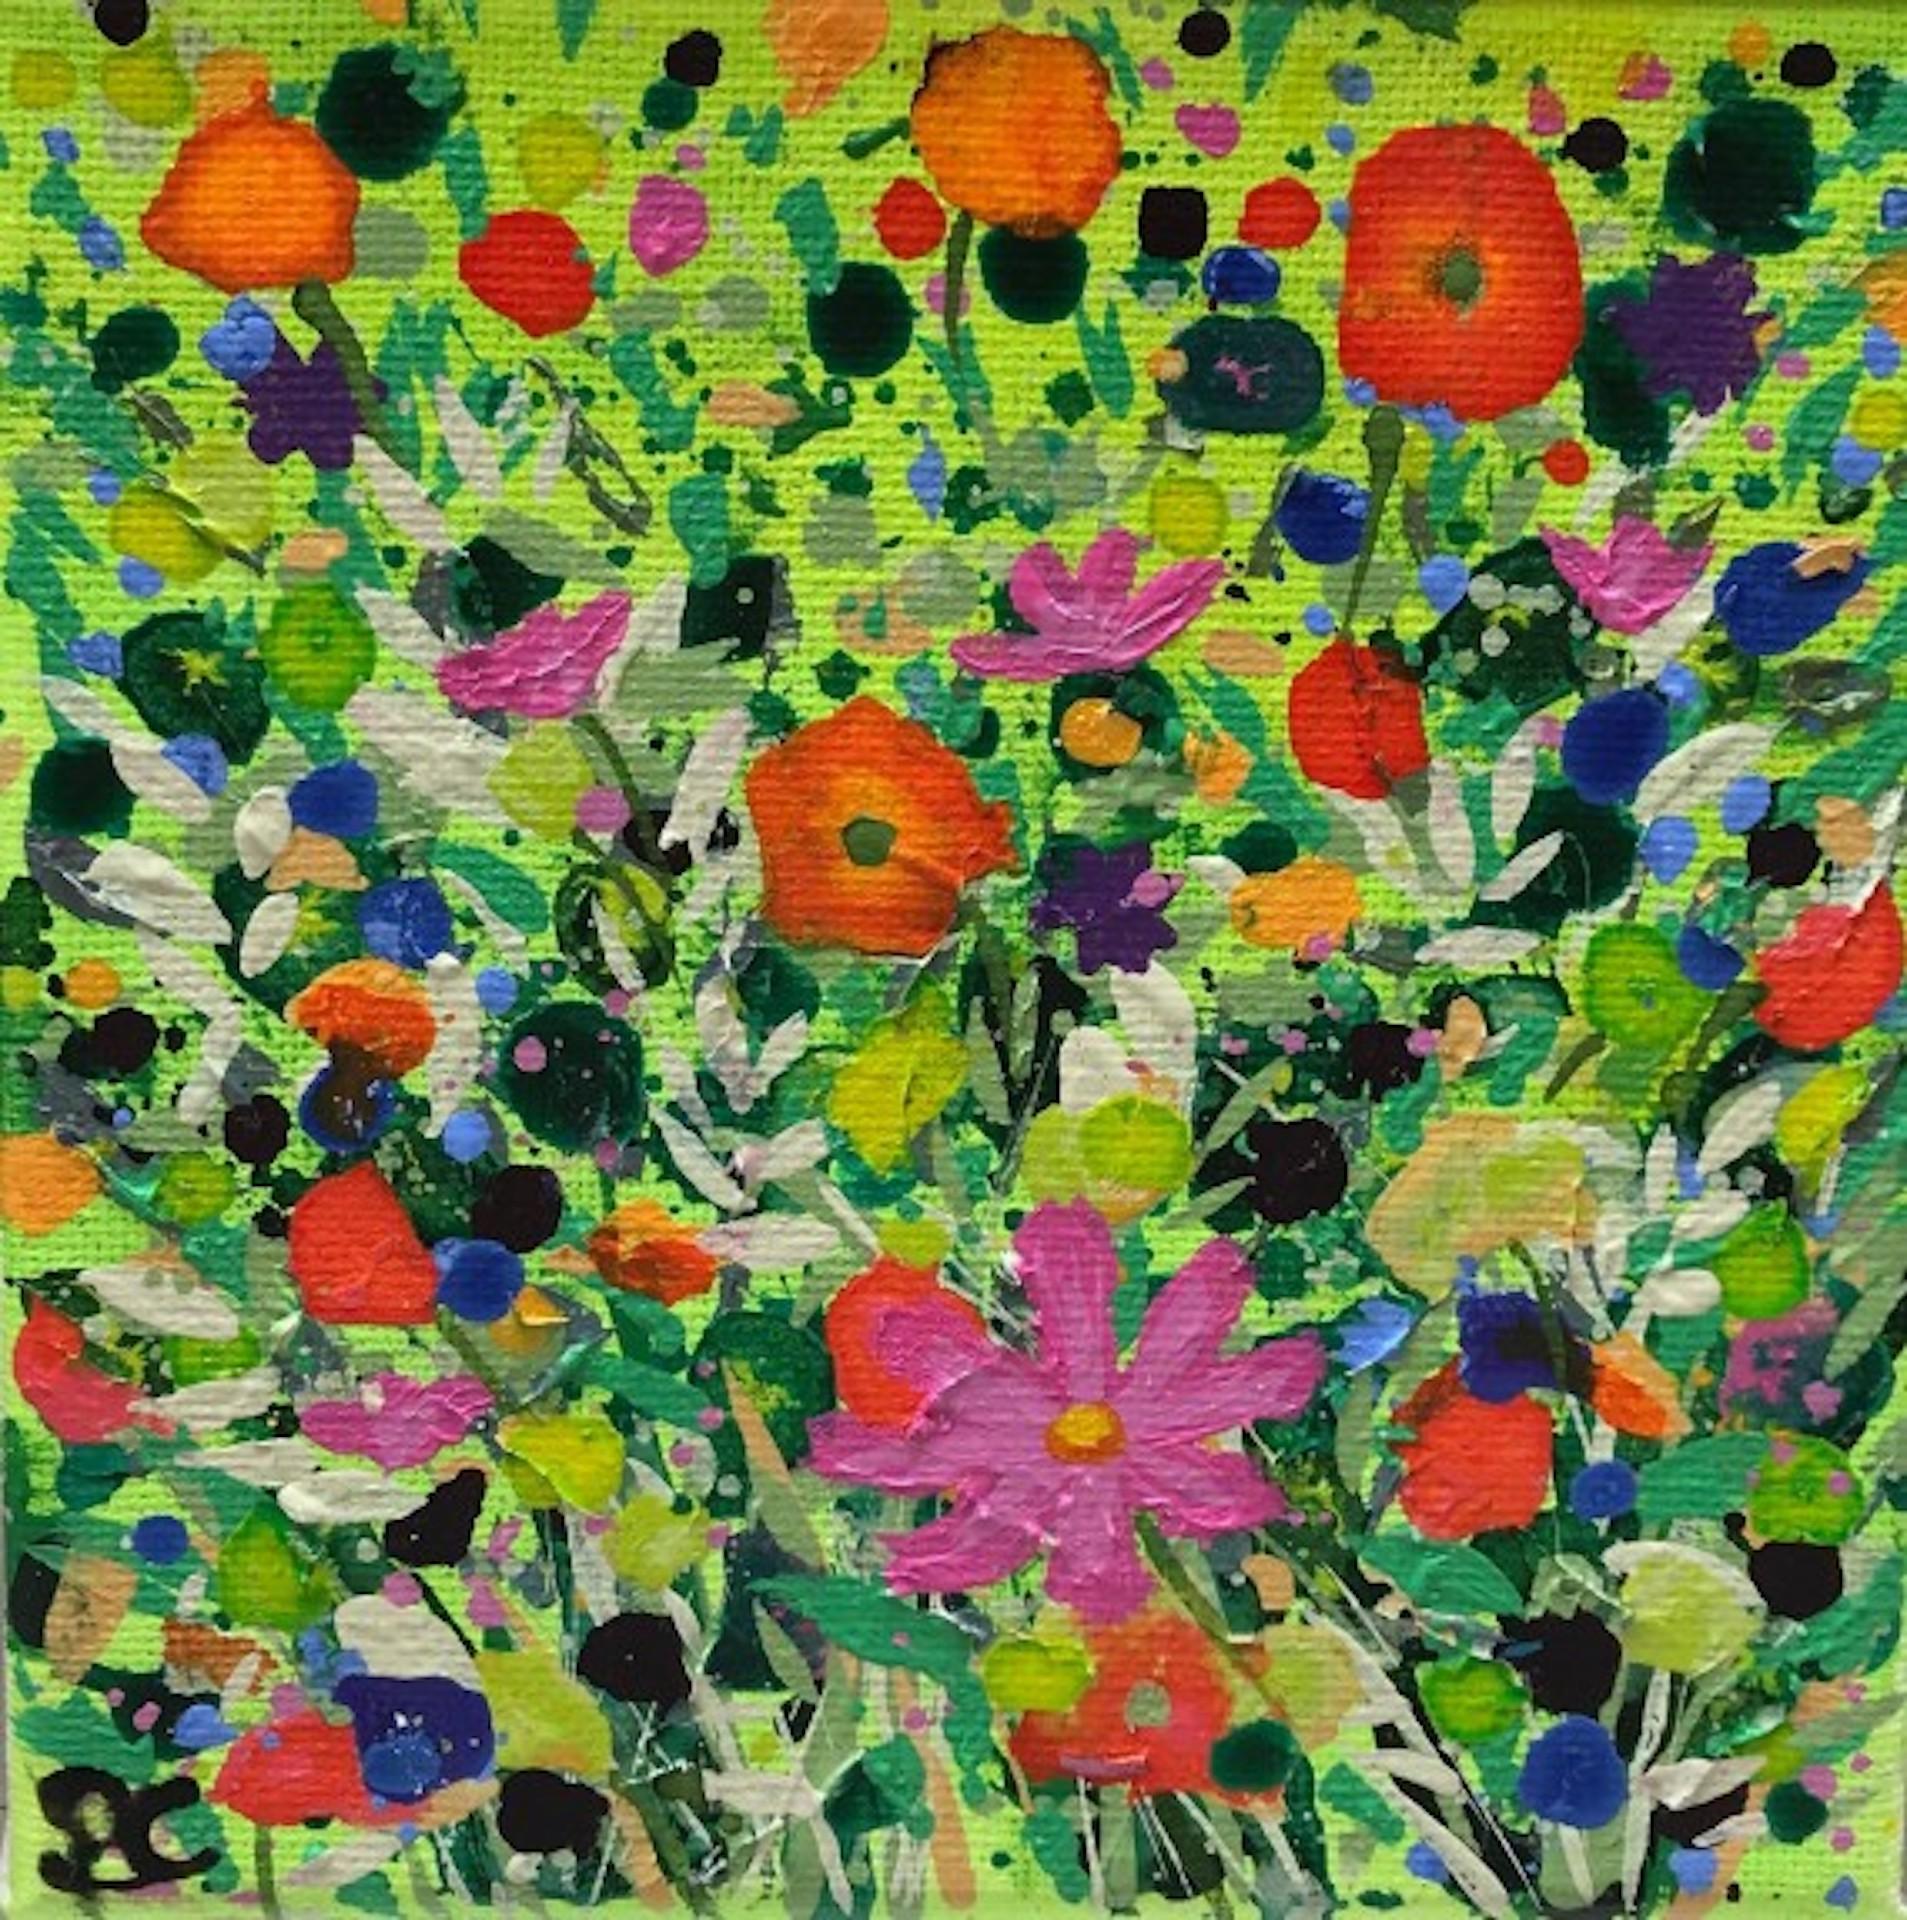 Summer Bouquet [2021]
Original
Flowers
Acrylic paint on canvas
Image size: H:15 cm x W:15 cm
Complete Size of Unframed Work: H:15 cm x W:15 cm x D:2cm
Frame Size: H:18.5 cm x W:18.5 cm x D:3.5cm
Sold Framed
Please note that insitu images are purely